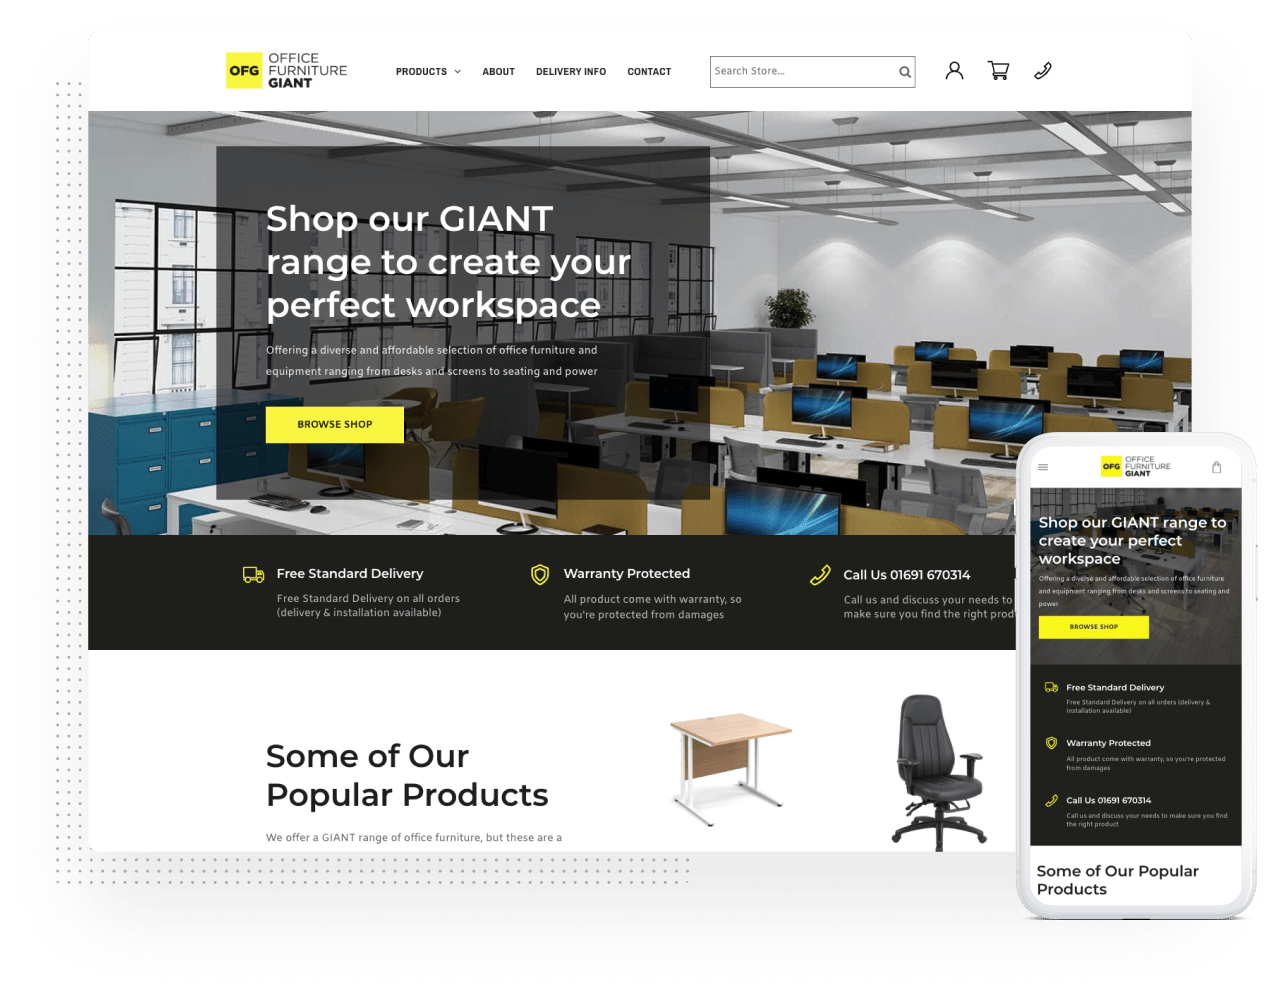 office furniture giants procredible website design